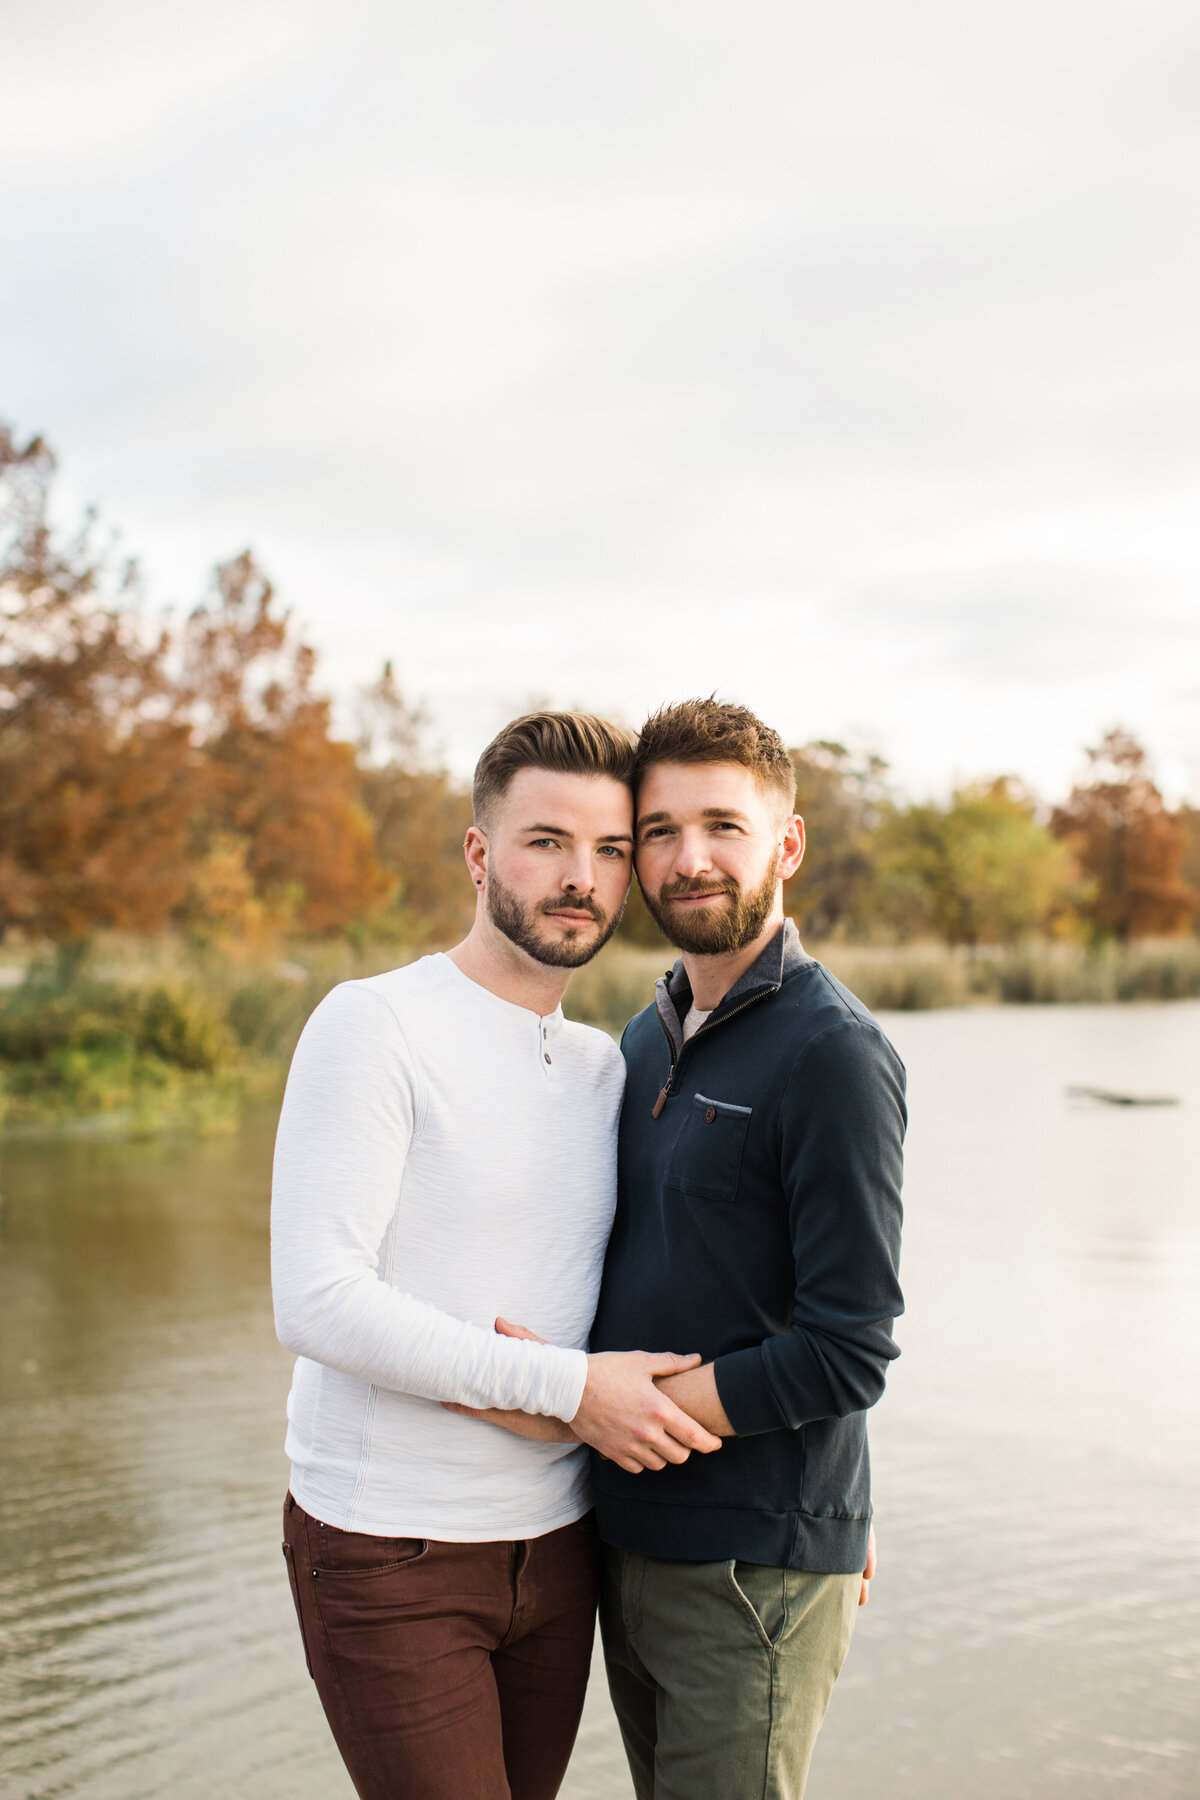 Couples | LGBTQ+ Friendly Dallas Wedding Photographer